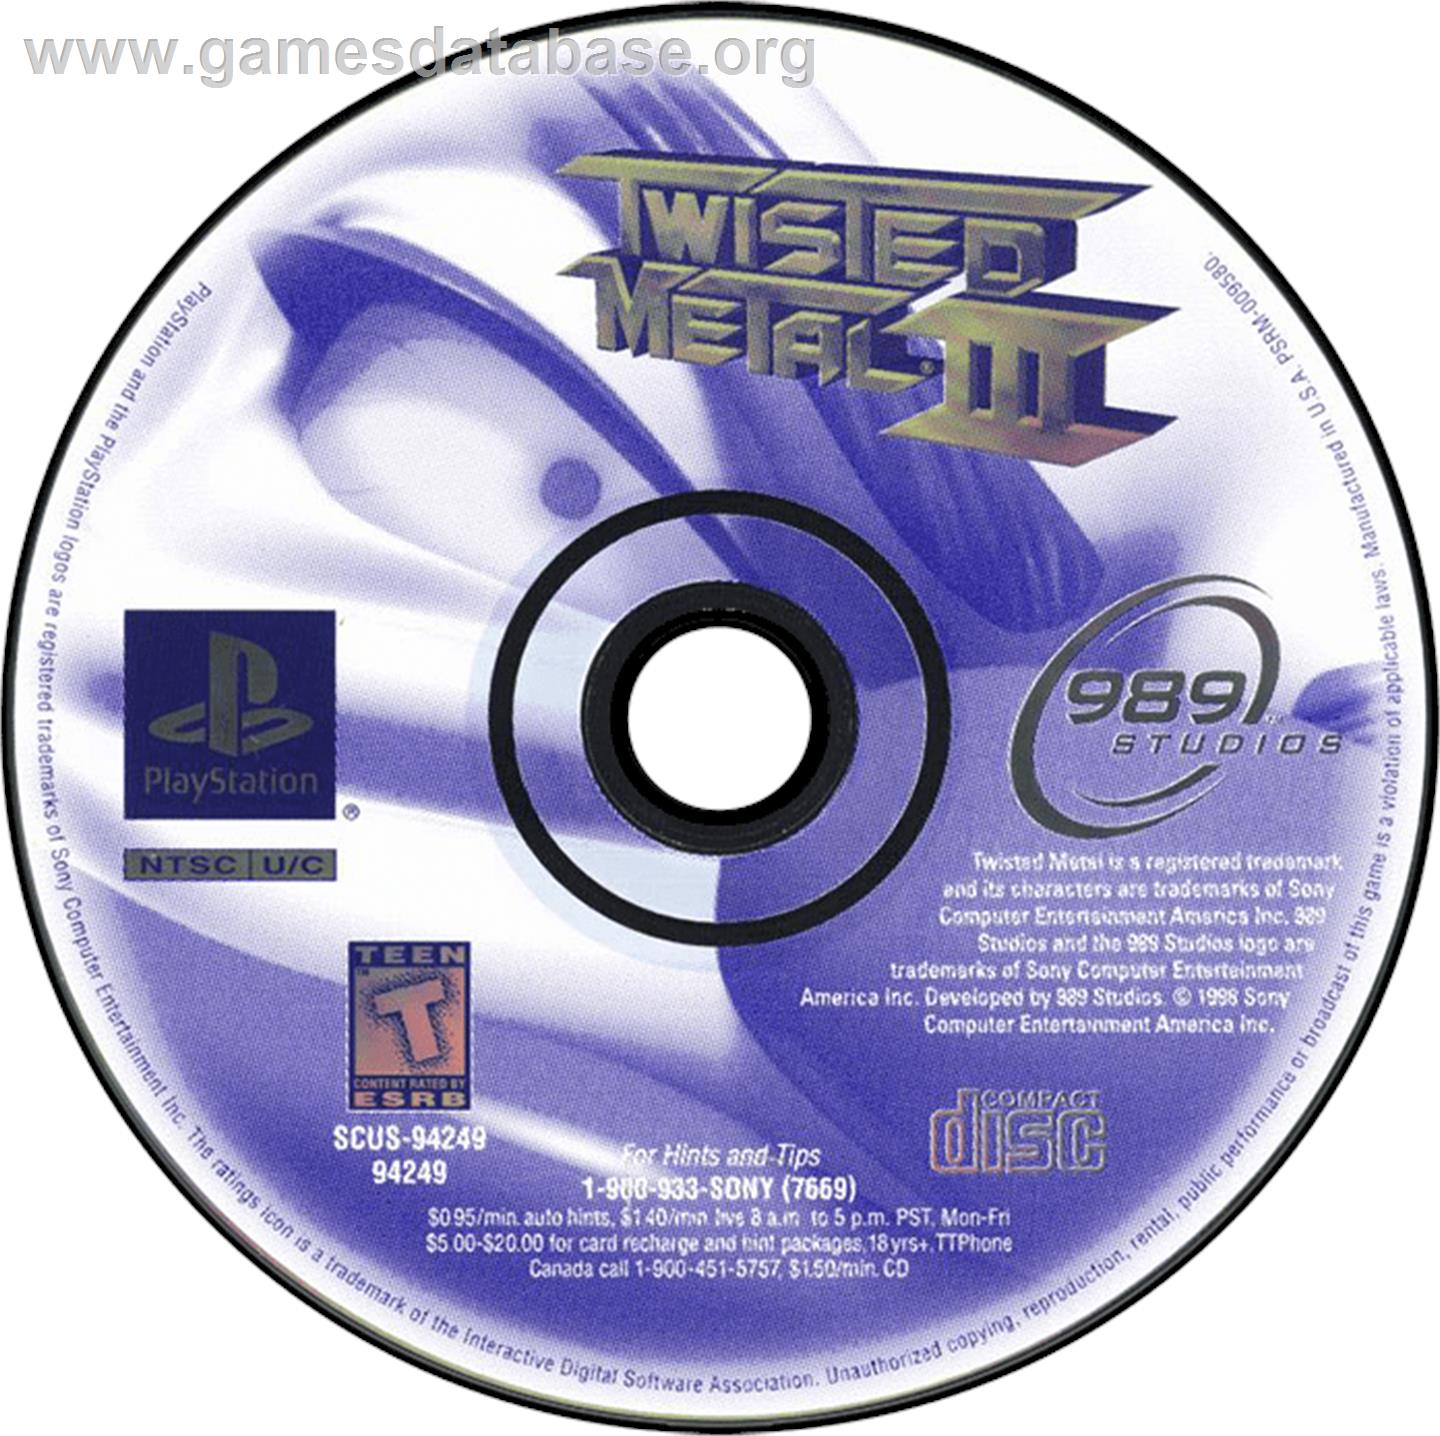 Twisted Metal III - Sony Playstation - Artwork - Disc